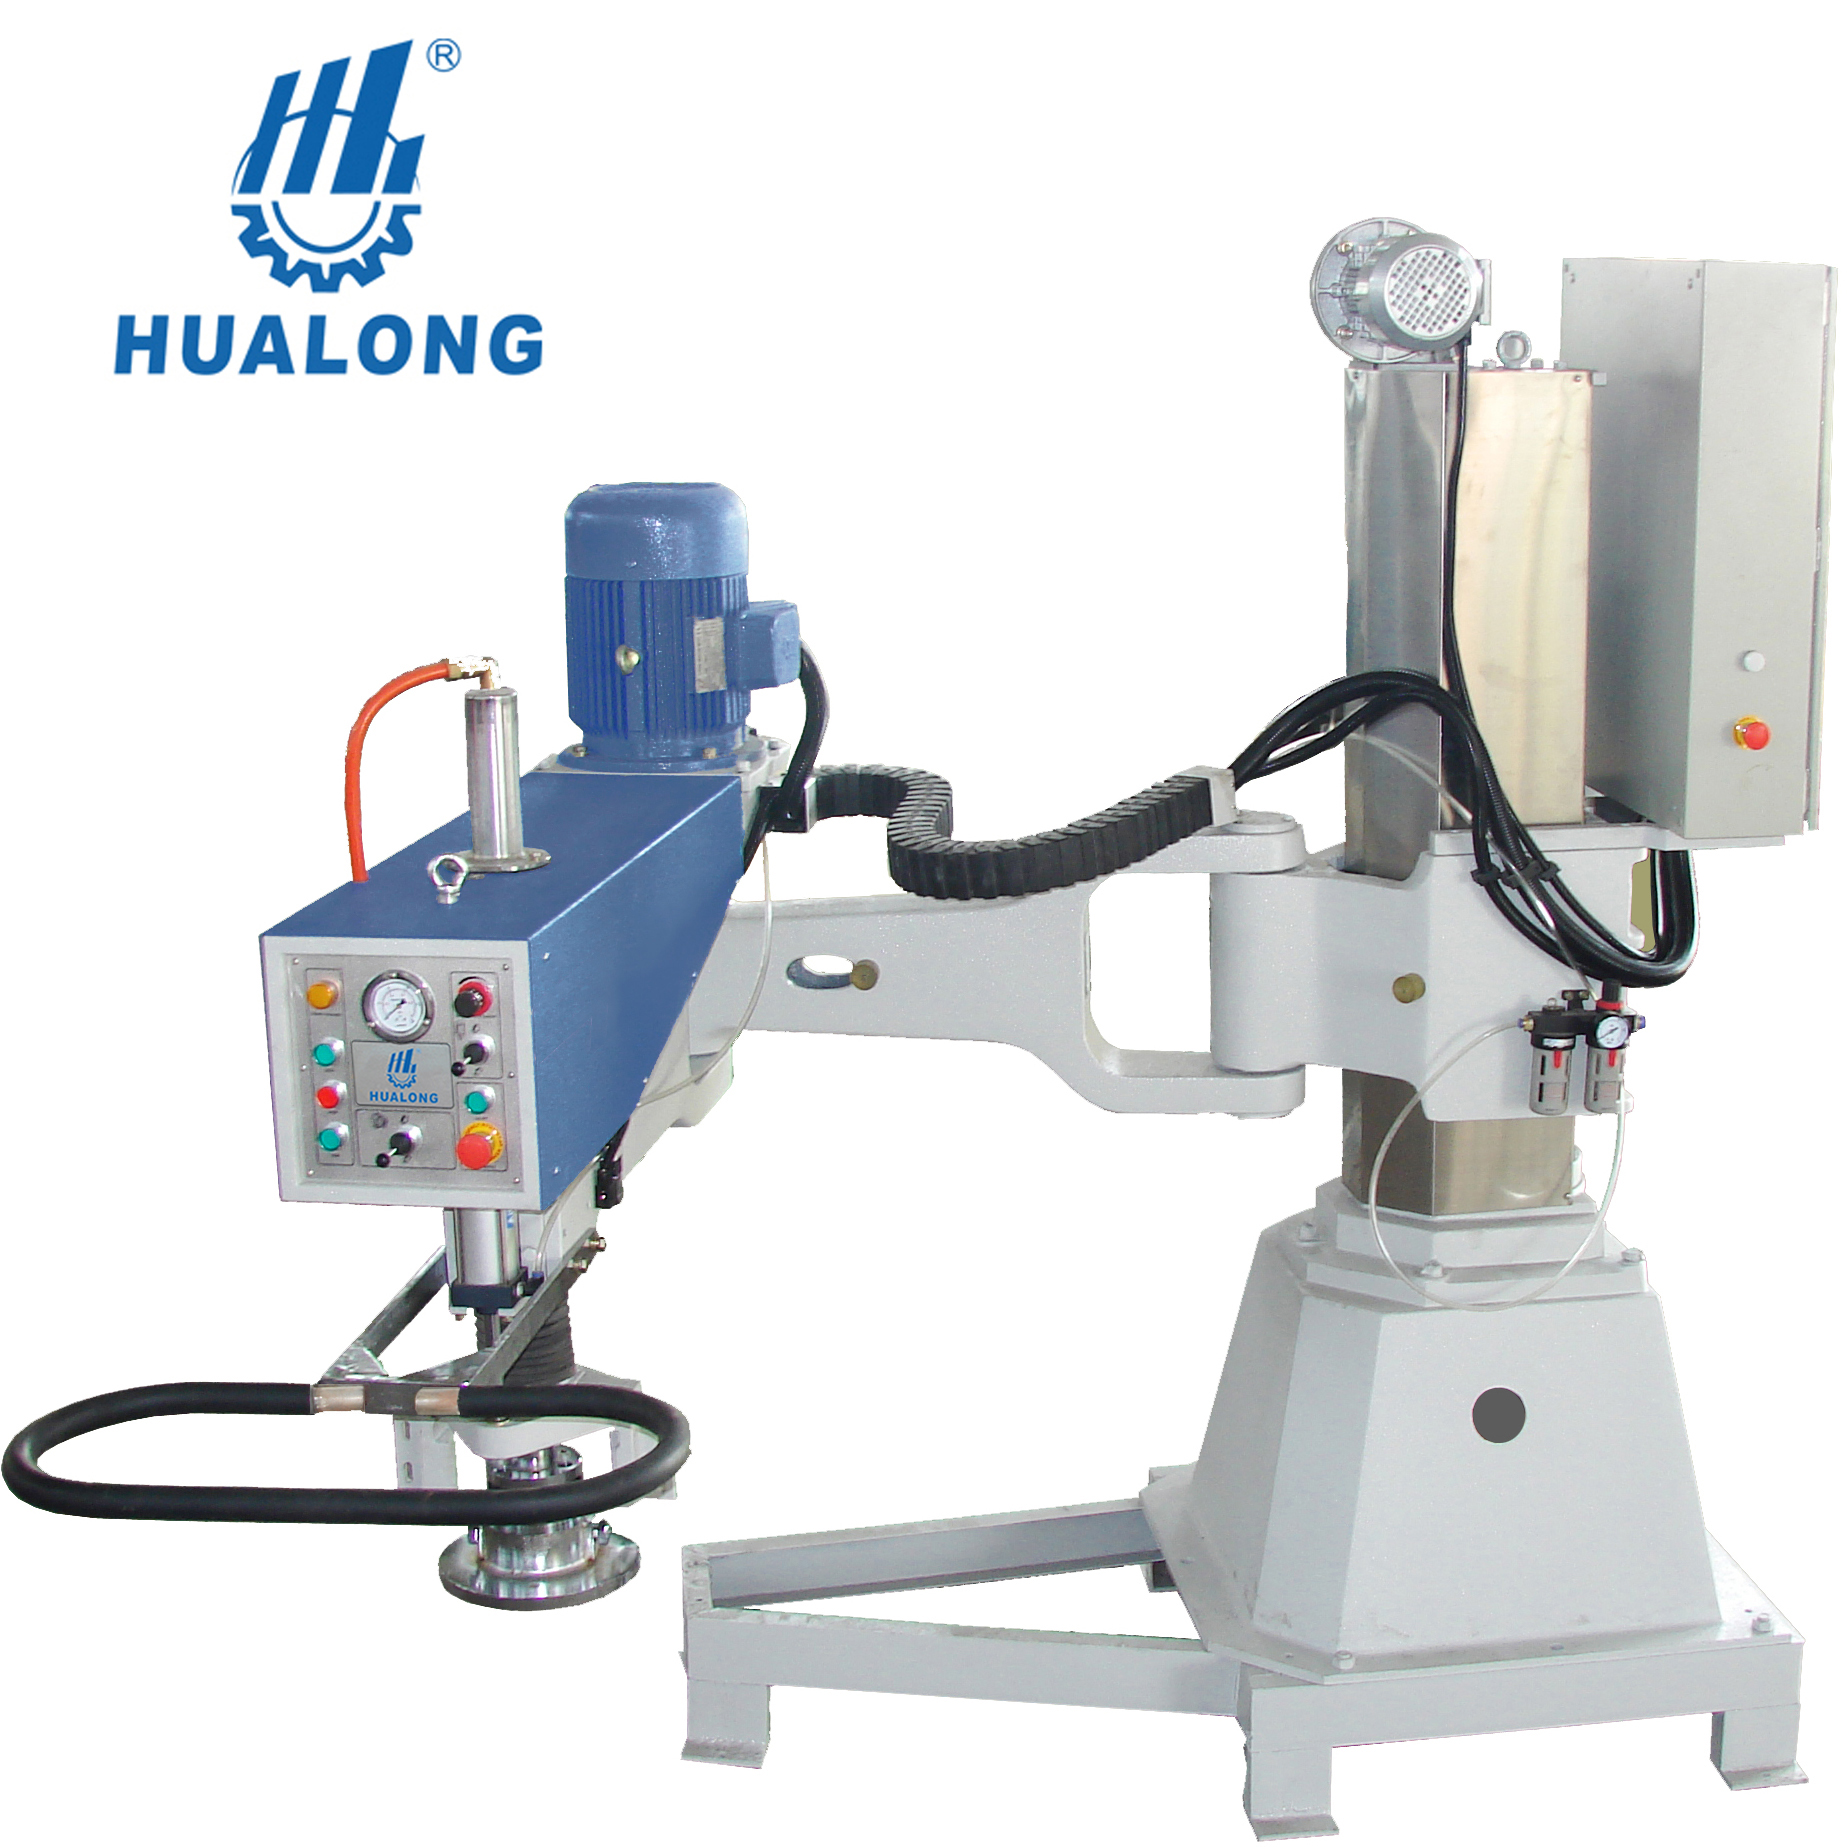 Hualong Stone Polishing Machine for Granite HHMS-1800 